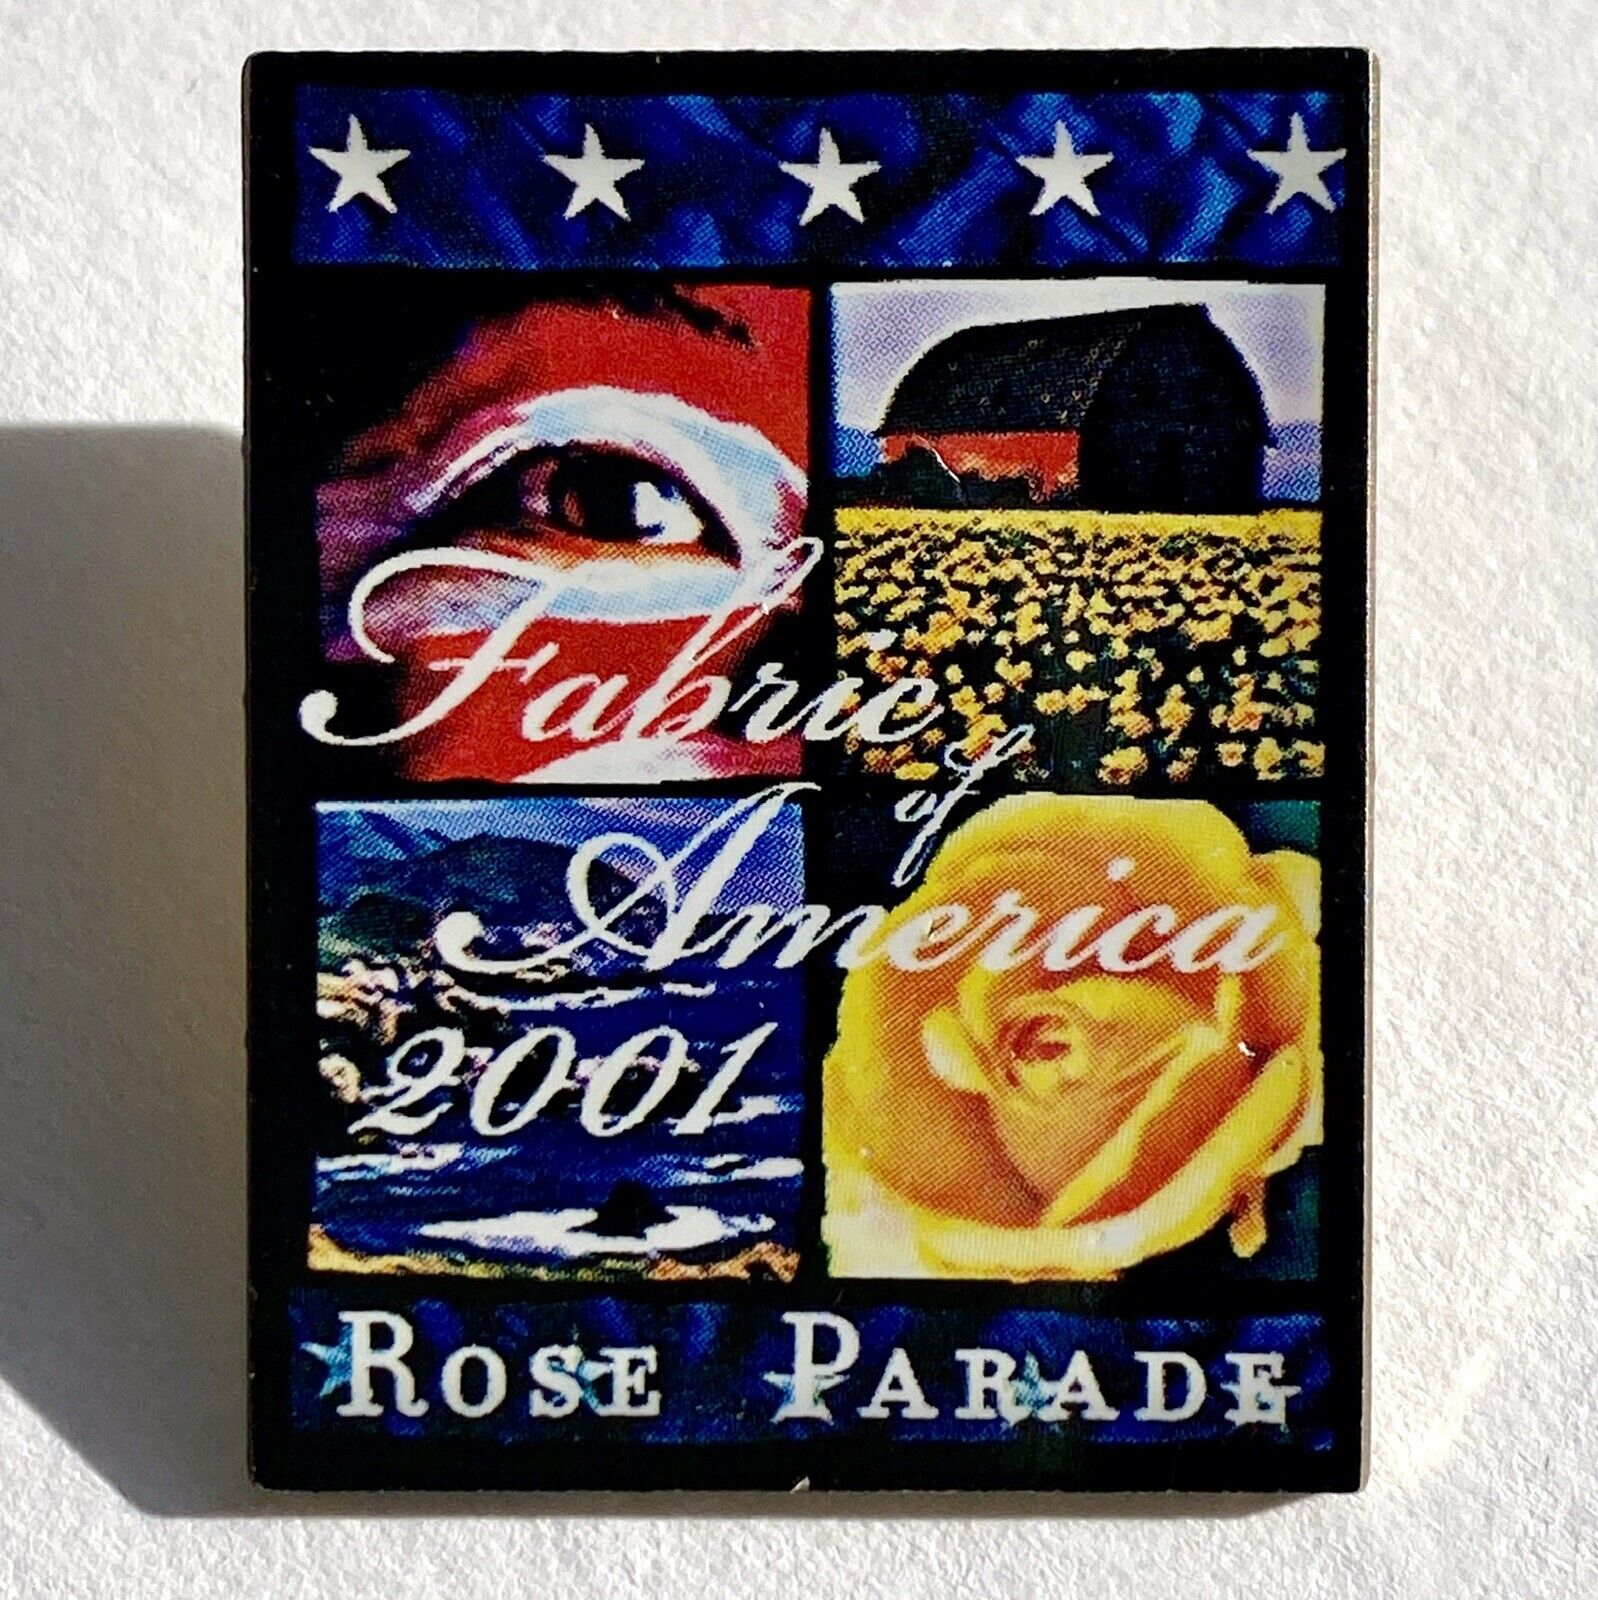 2001 Rose Parade Theme Pin - Fabric of America